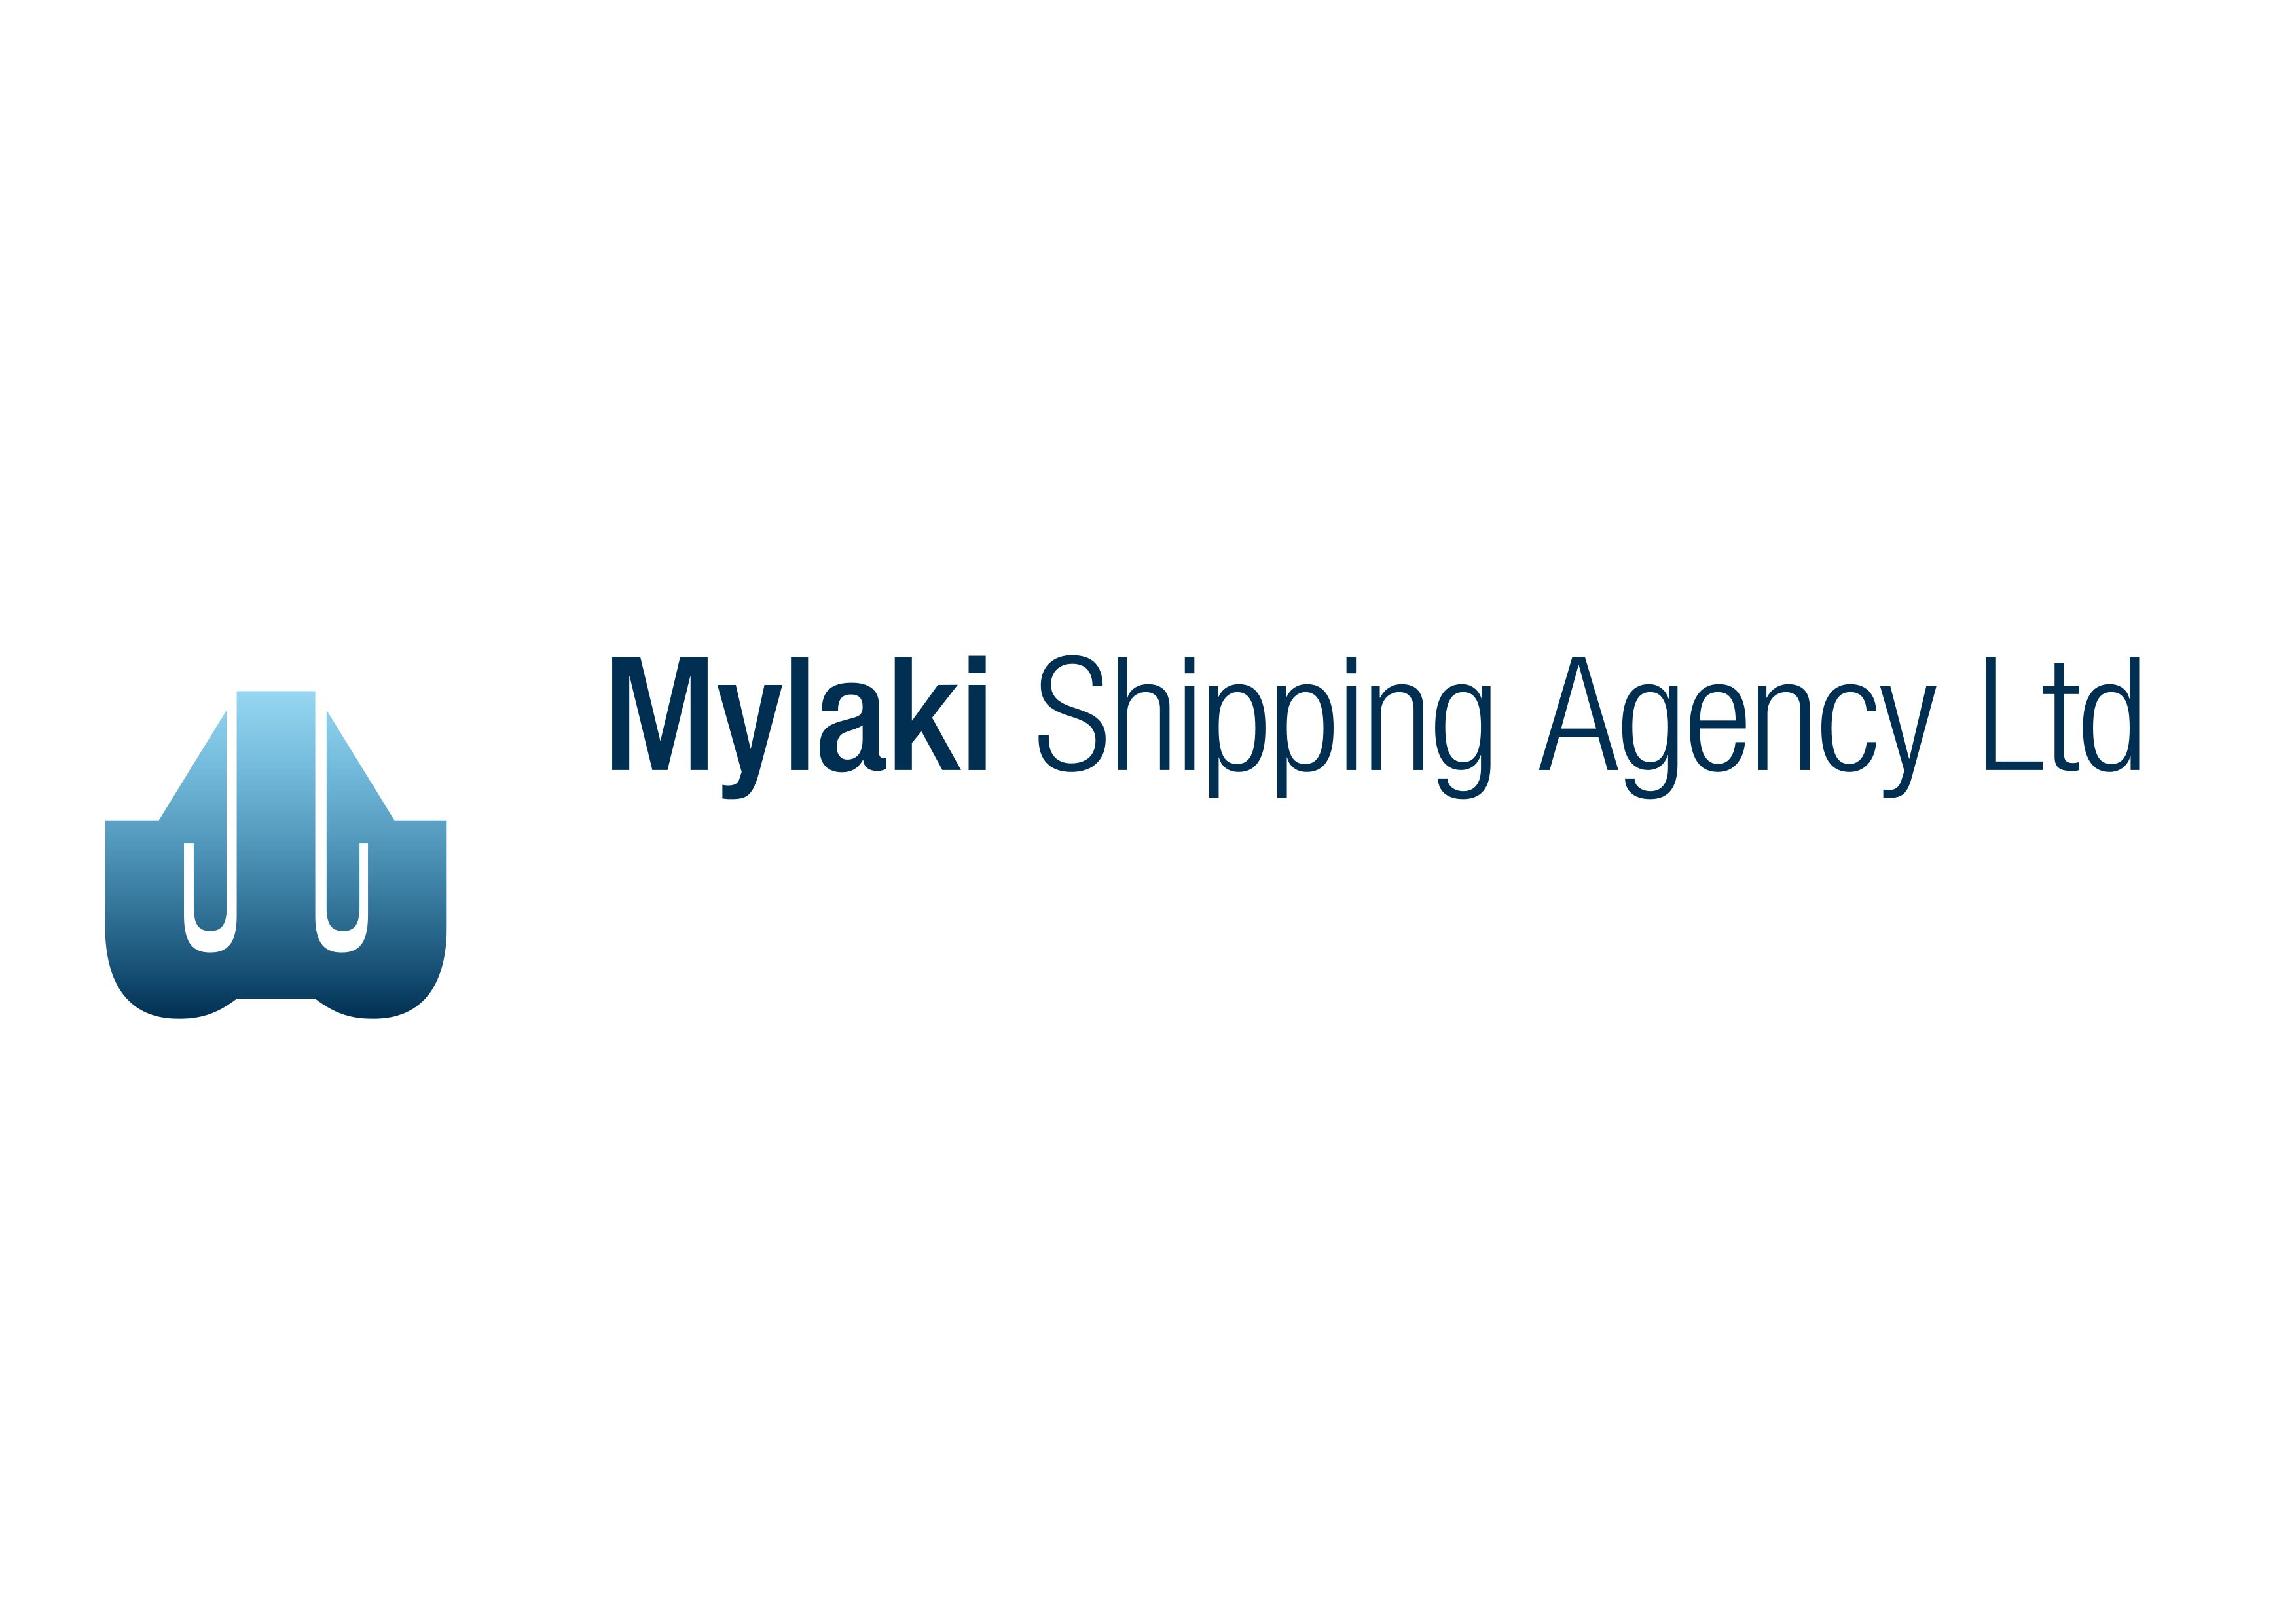 Mylaki Shipping Agency Ltd